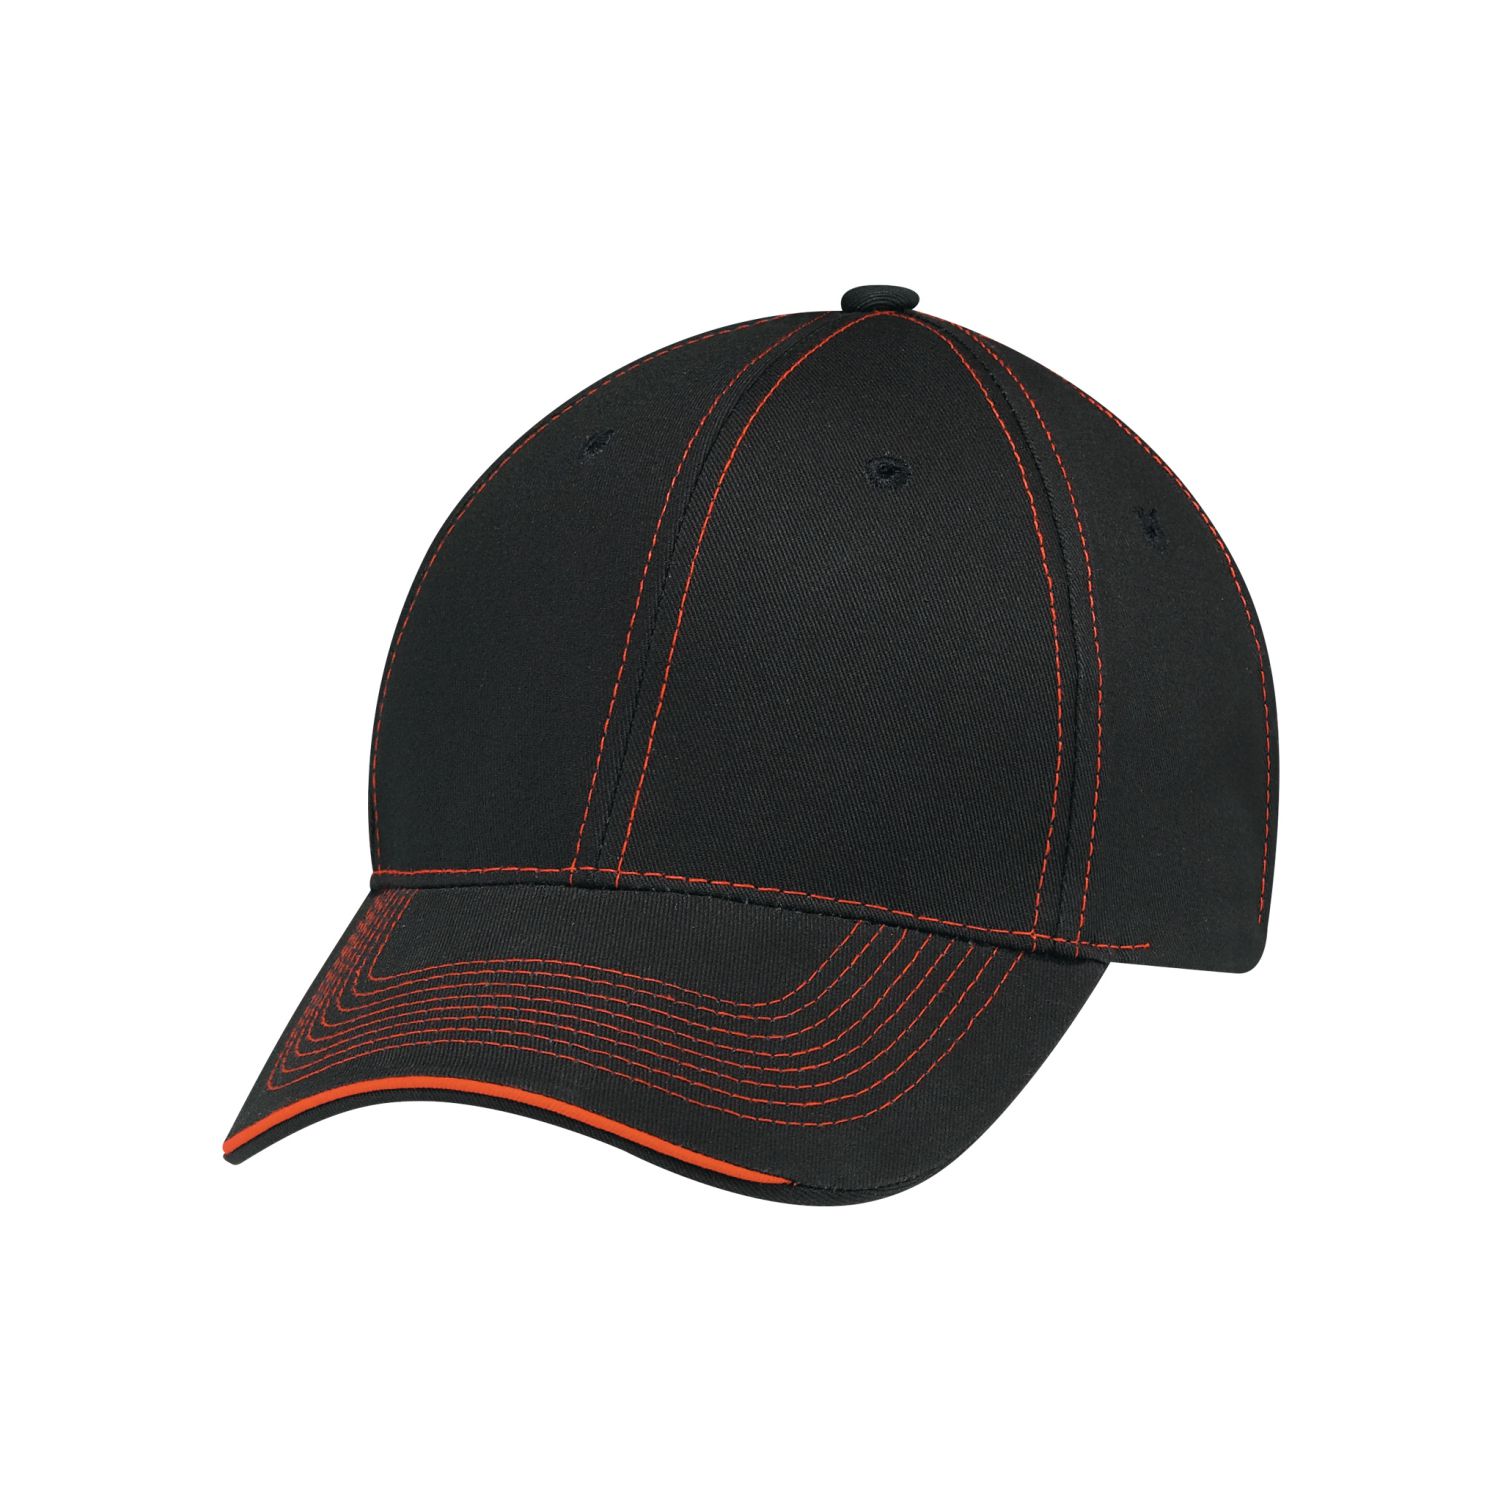 AJM 6-Panel Constructed Full-Fit Hat #6F617M Black / Orange